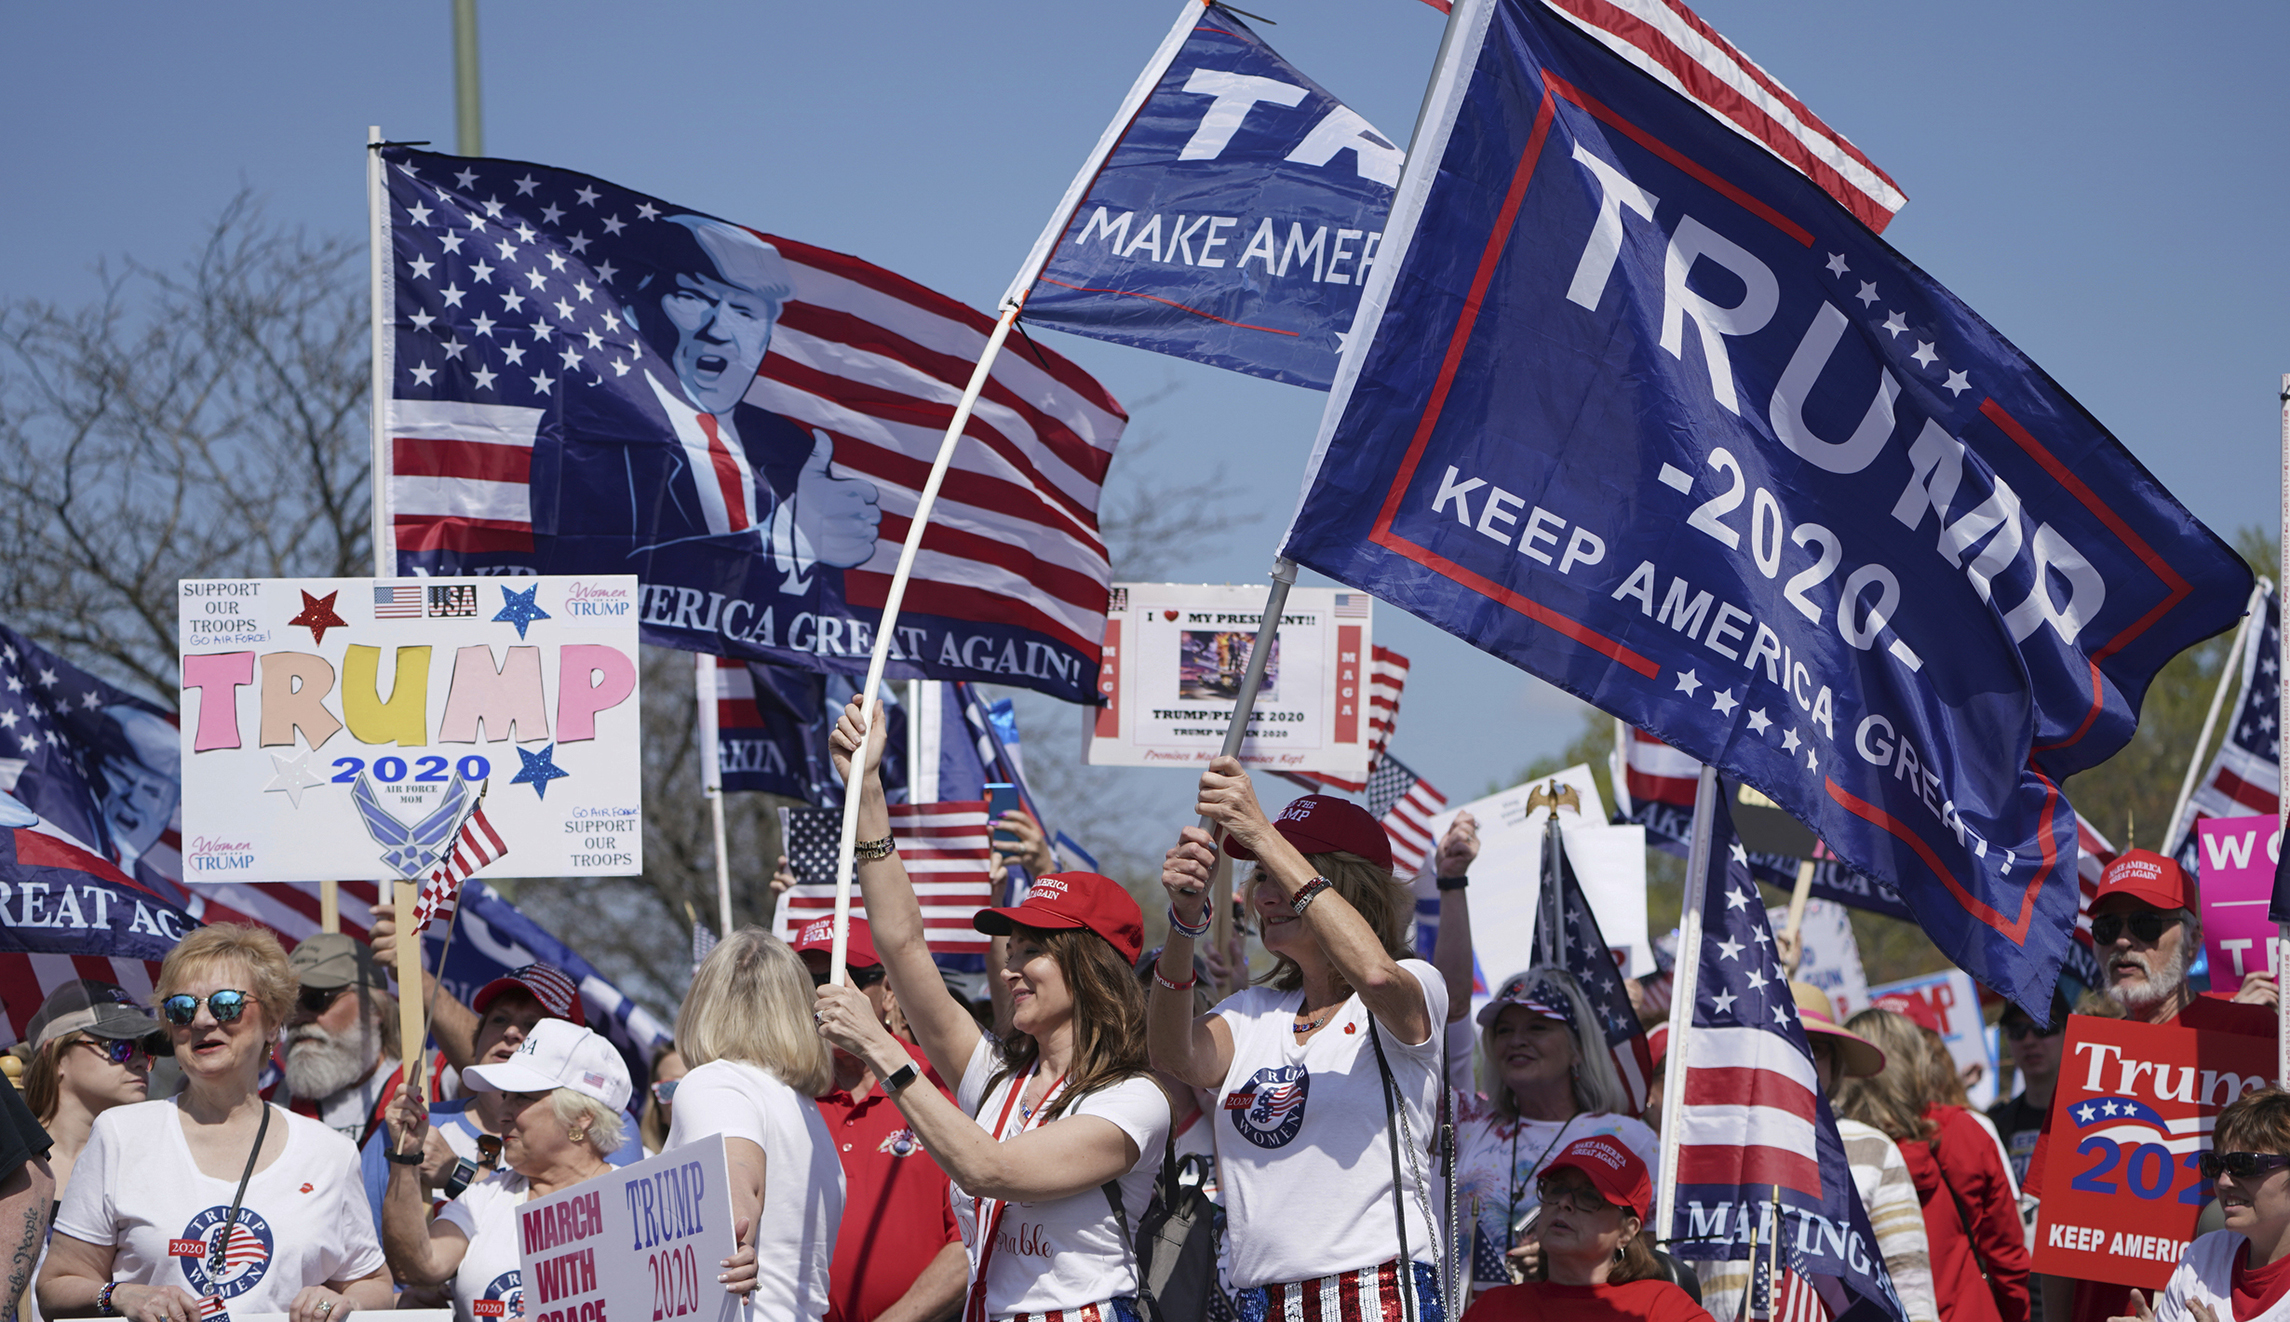 Trump supporters march down Washington streets to back president after his coronavirus diagnosis - Washington Examiner